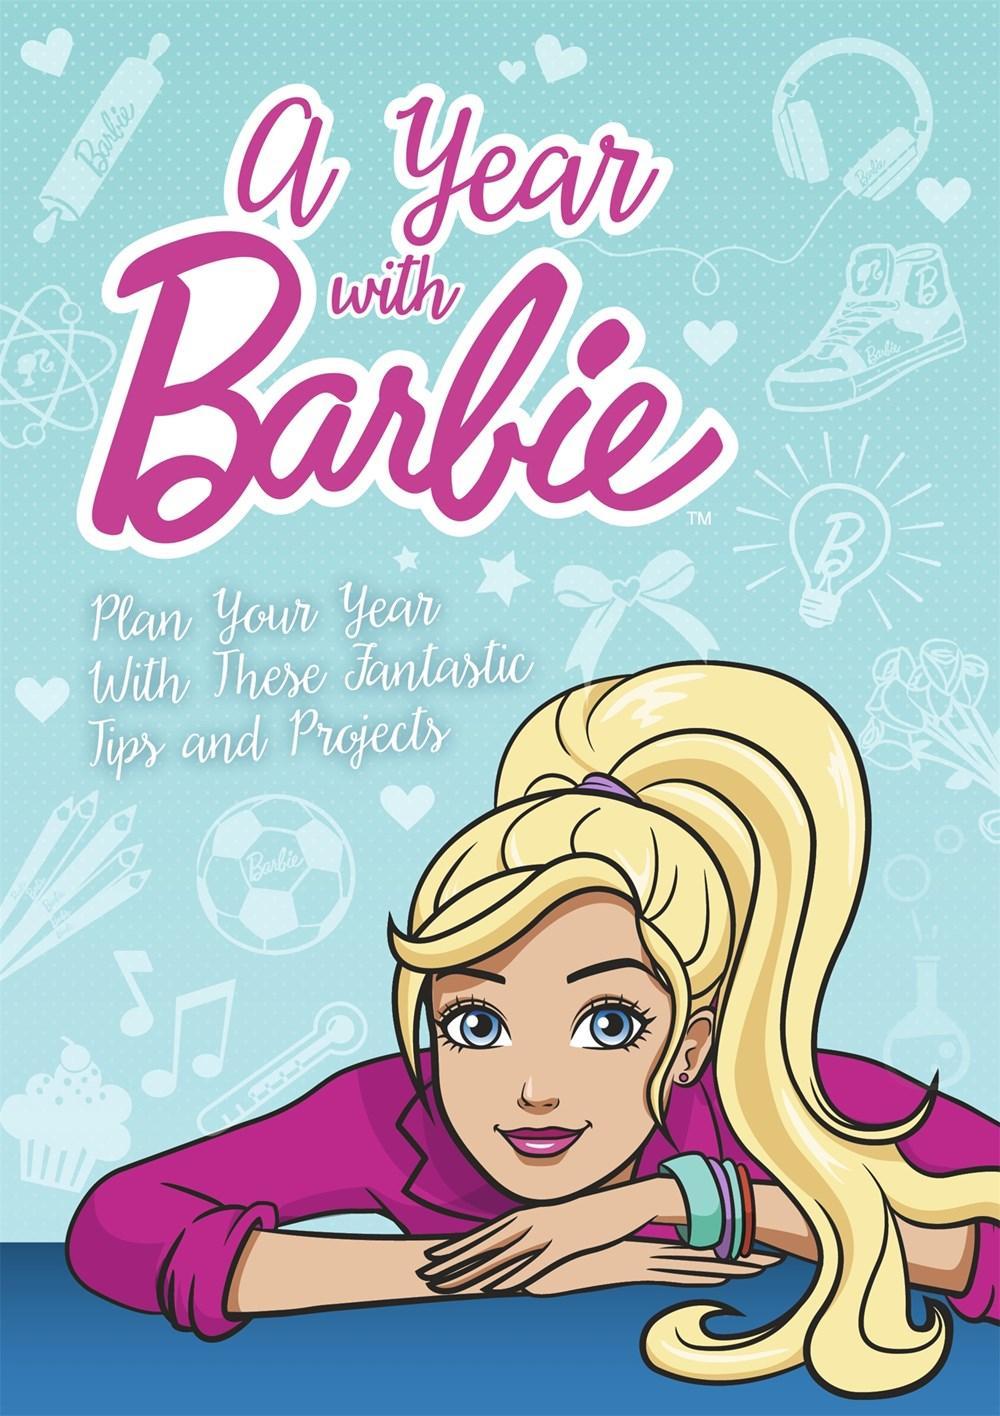 EDDA USA JANUARY 2017 A Year With Barbie A novelty calendar diary with a folded magnet to close.